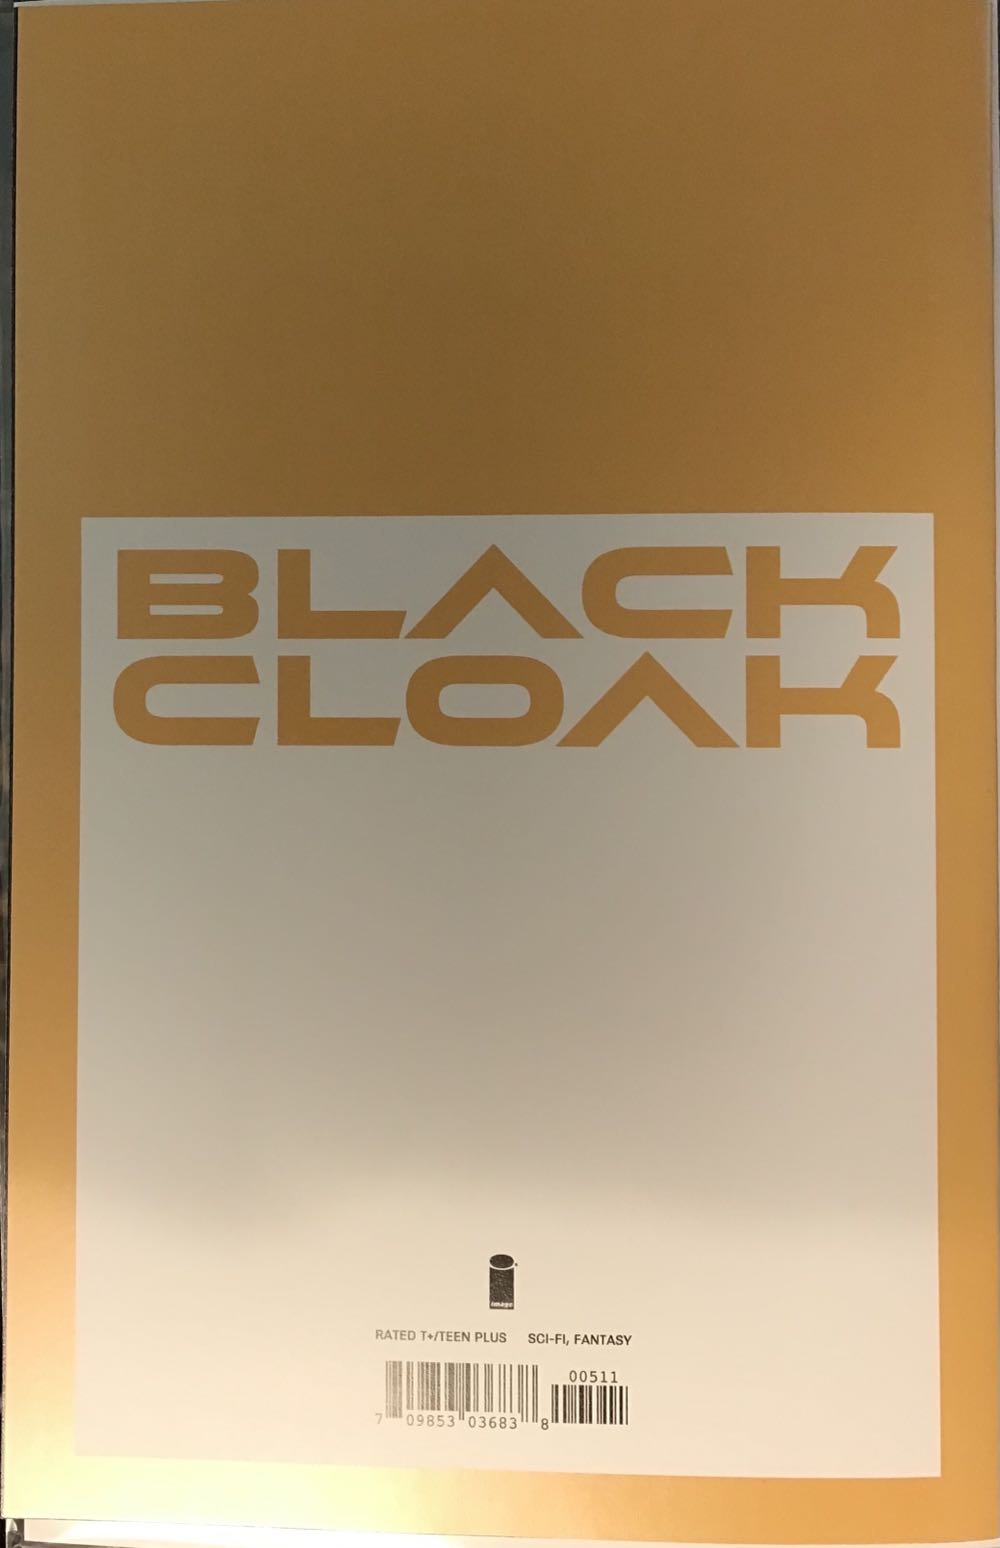 Black Cloak - Image Comics (5 - May 2023) comic book collectible [Barcode 70985303683800511] - Main Image 2